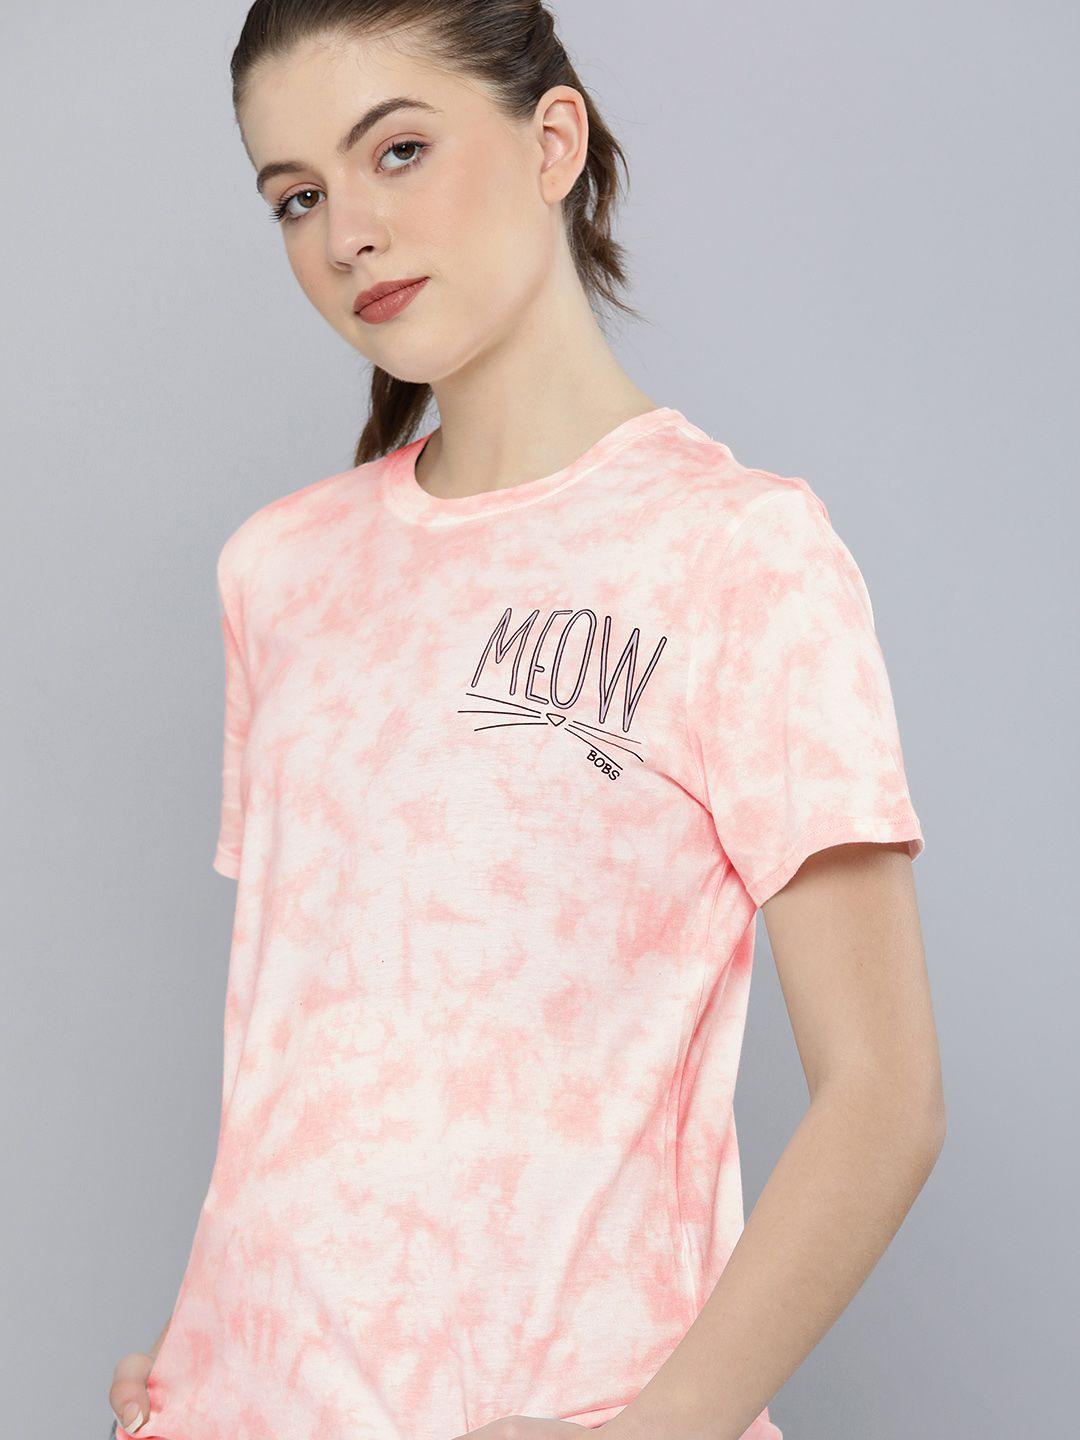 skechers women pink meow printed t-shirt